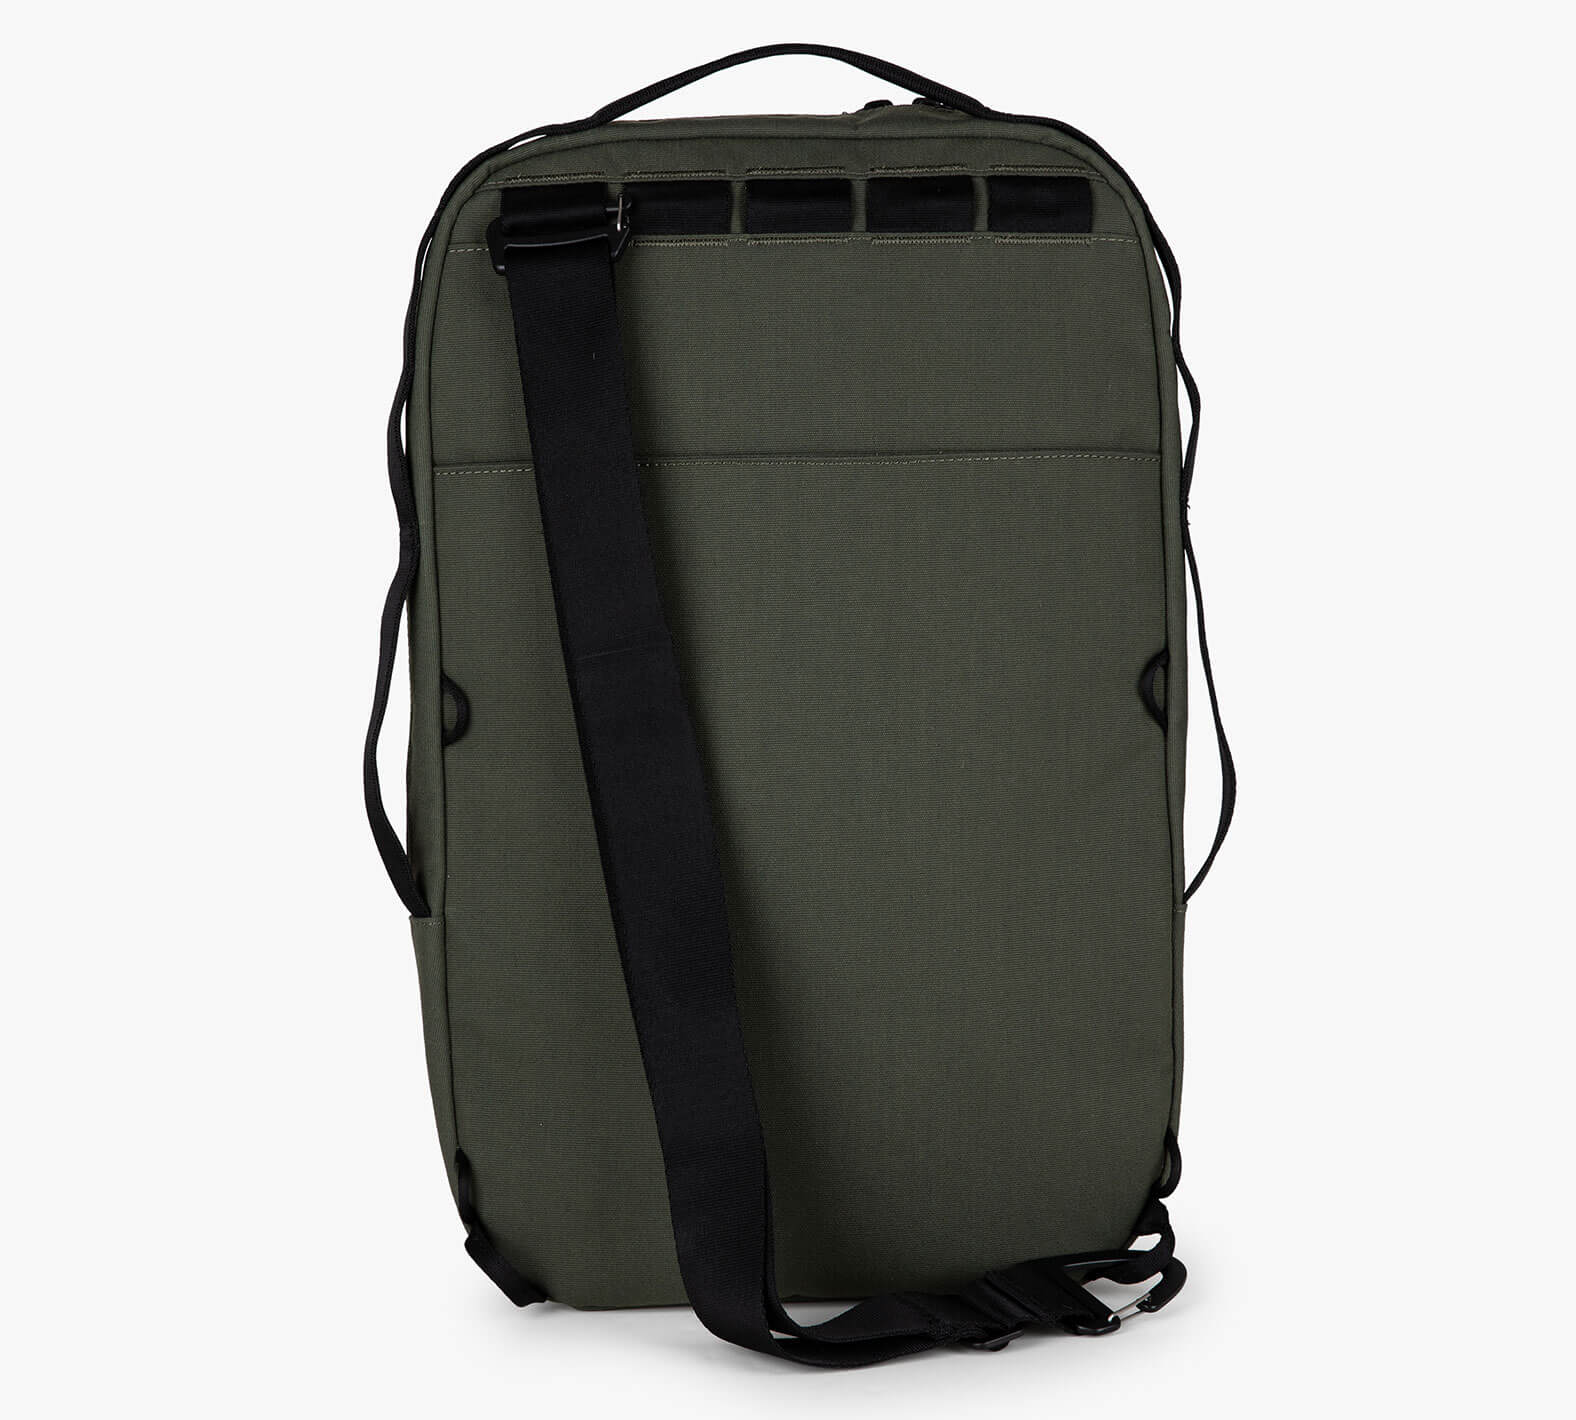 Green sling backpack